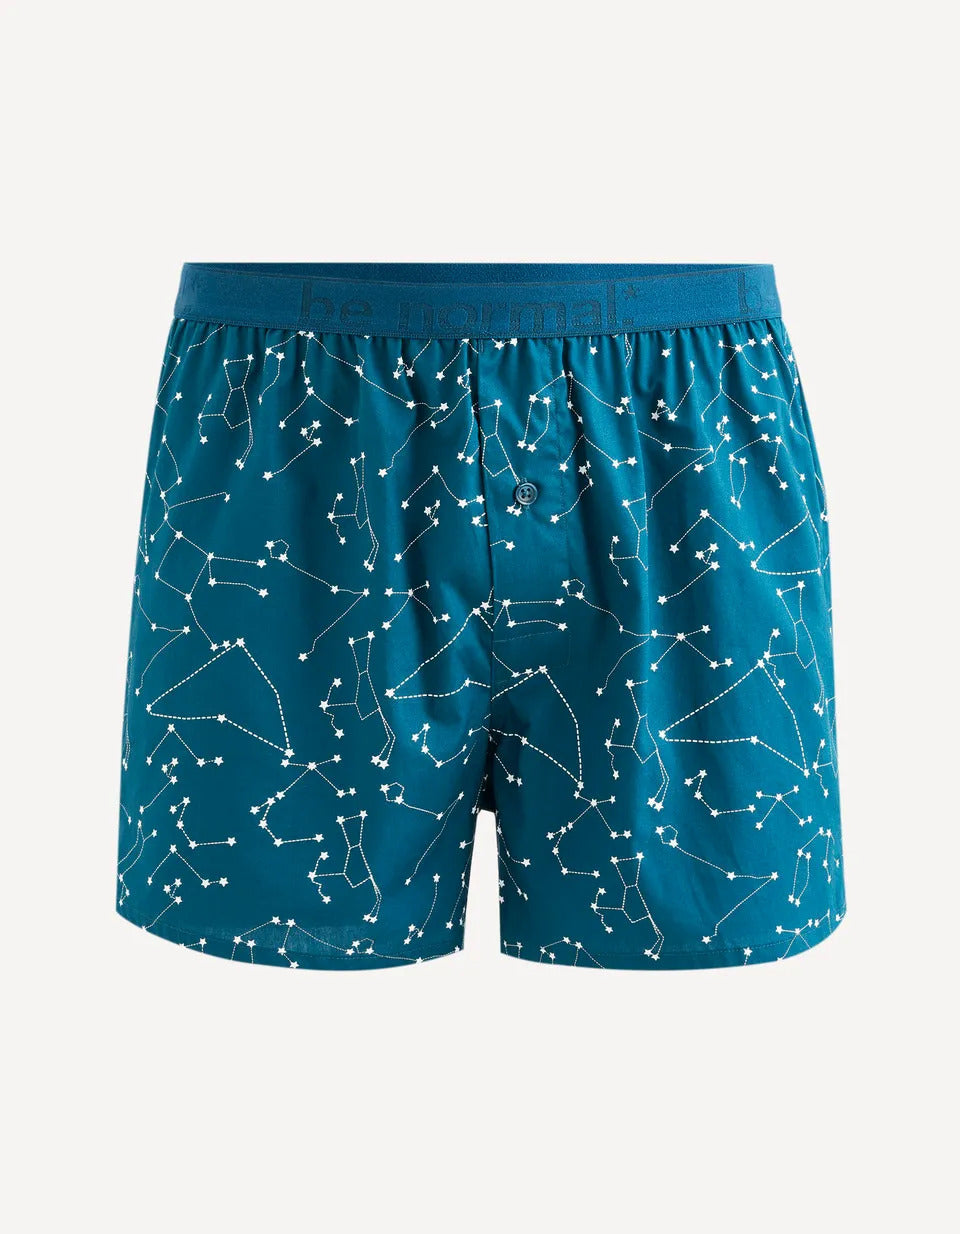 Constellation 100% Cotton Poplin Boxer Shorts - Petrol Blue - 01